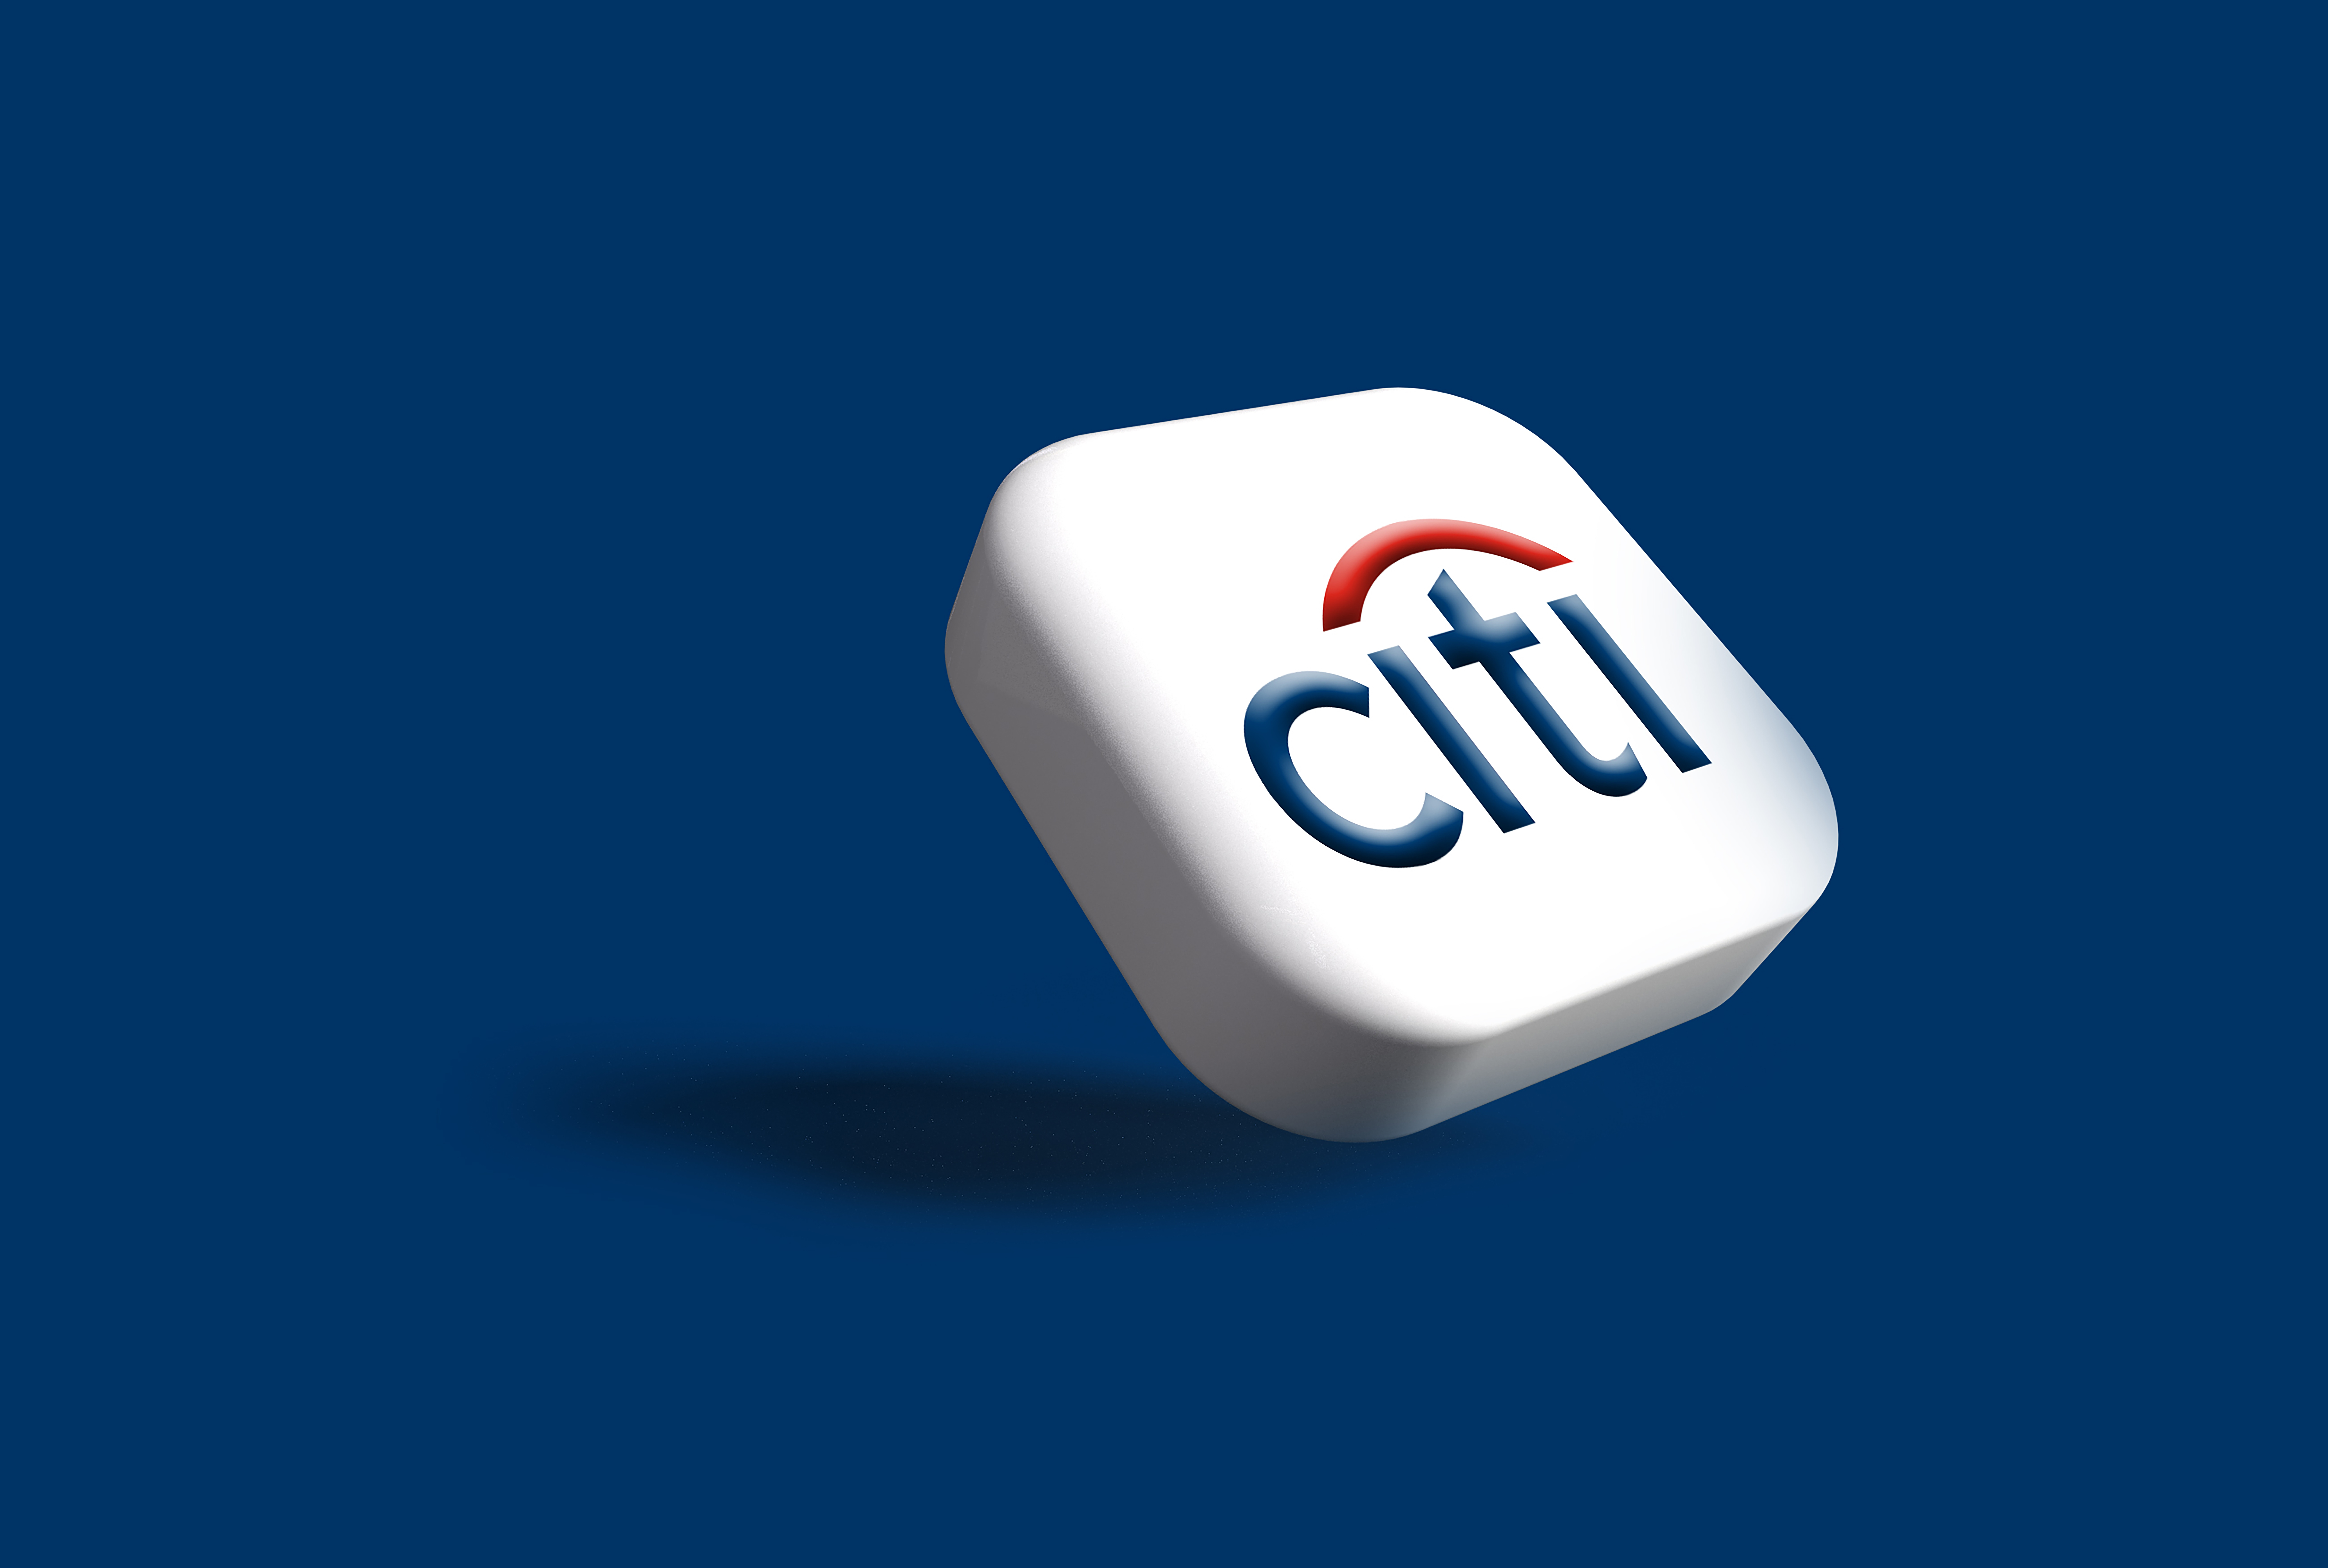 Логотип Citi